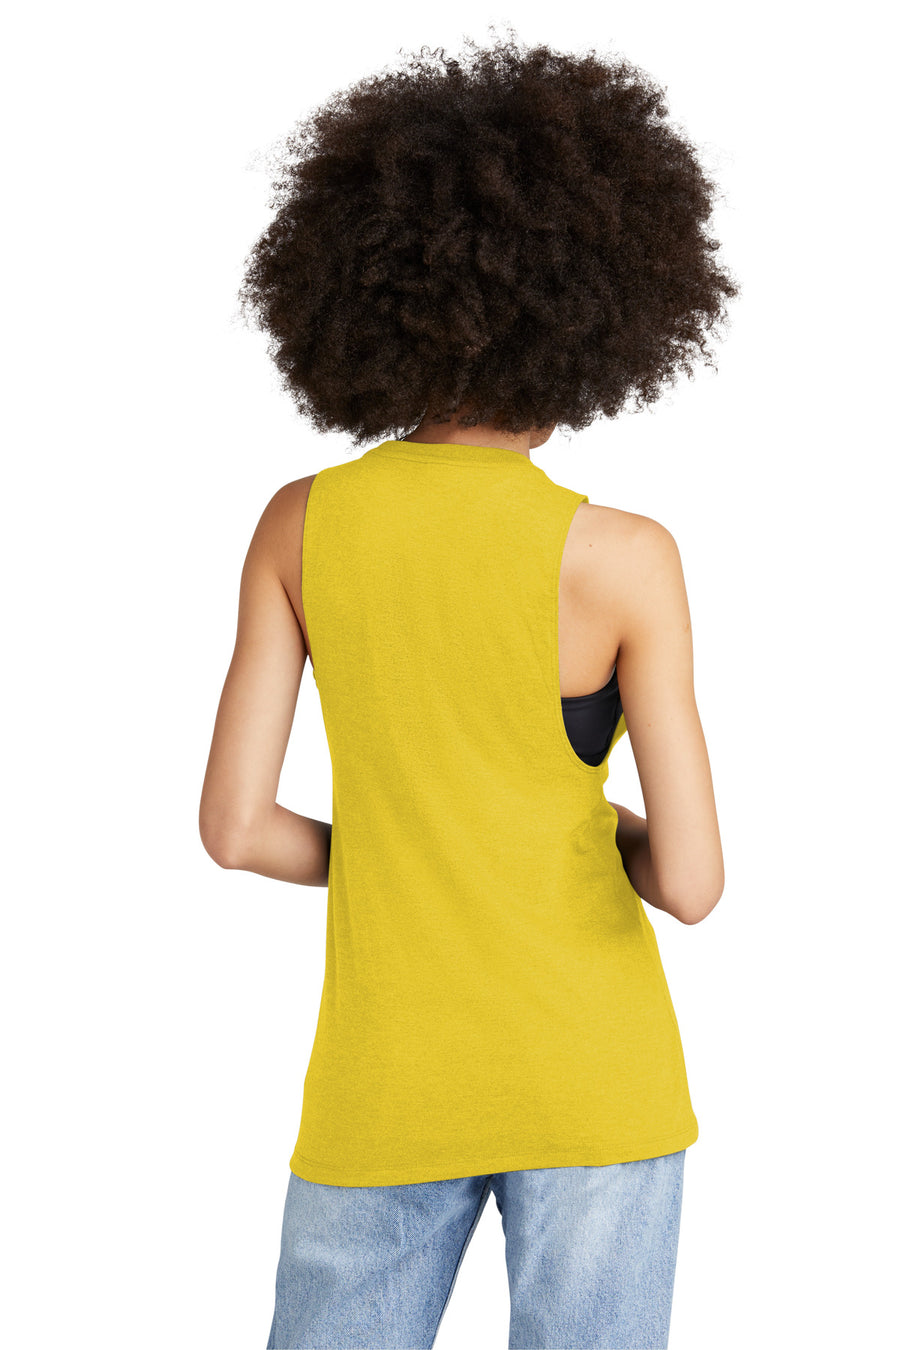 DT153-Ochre Yellow Heather-back_model